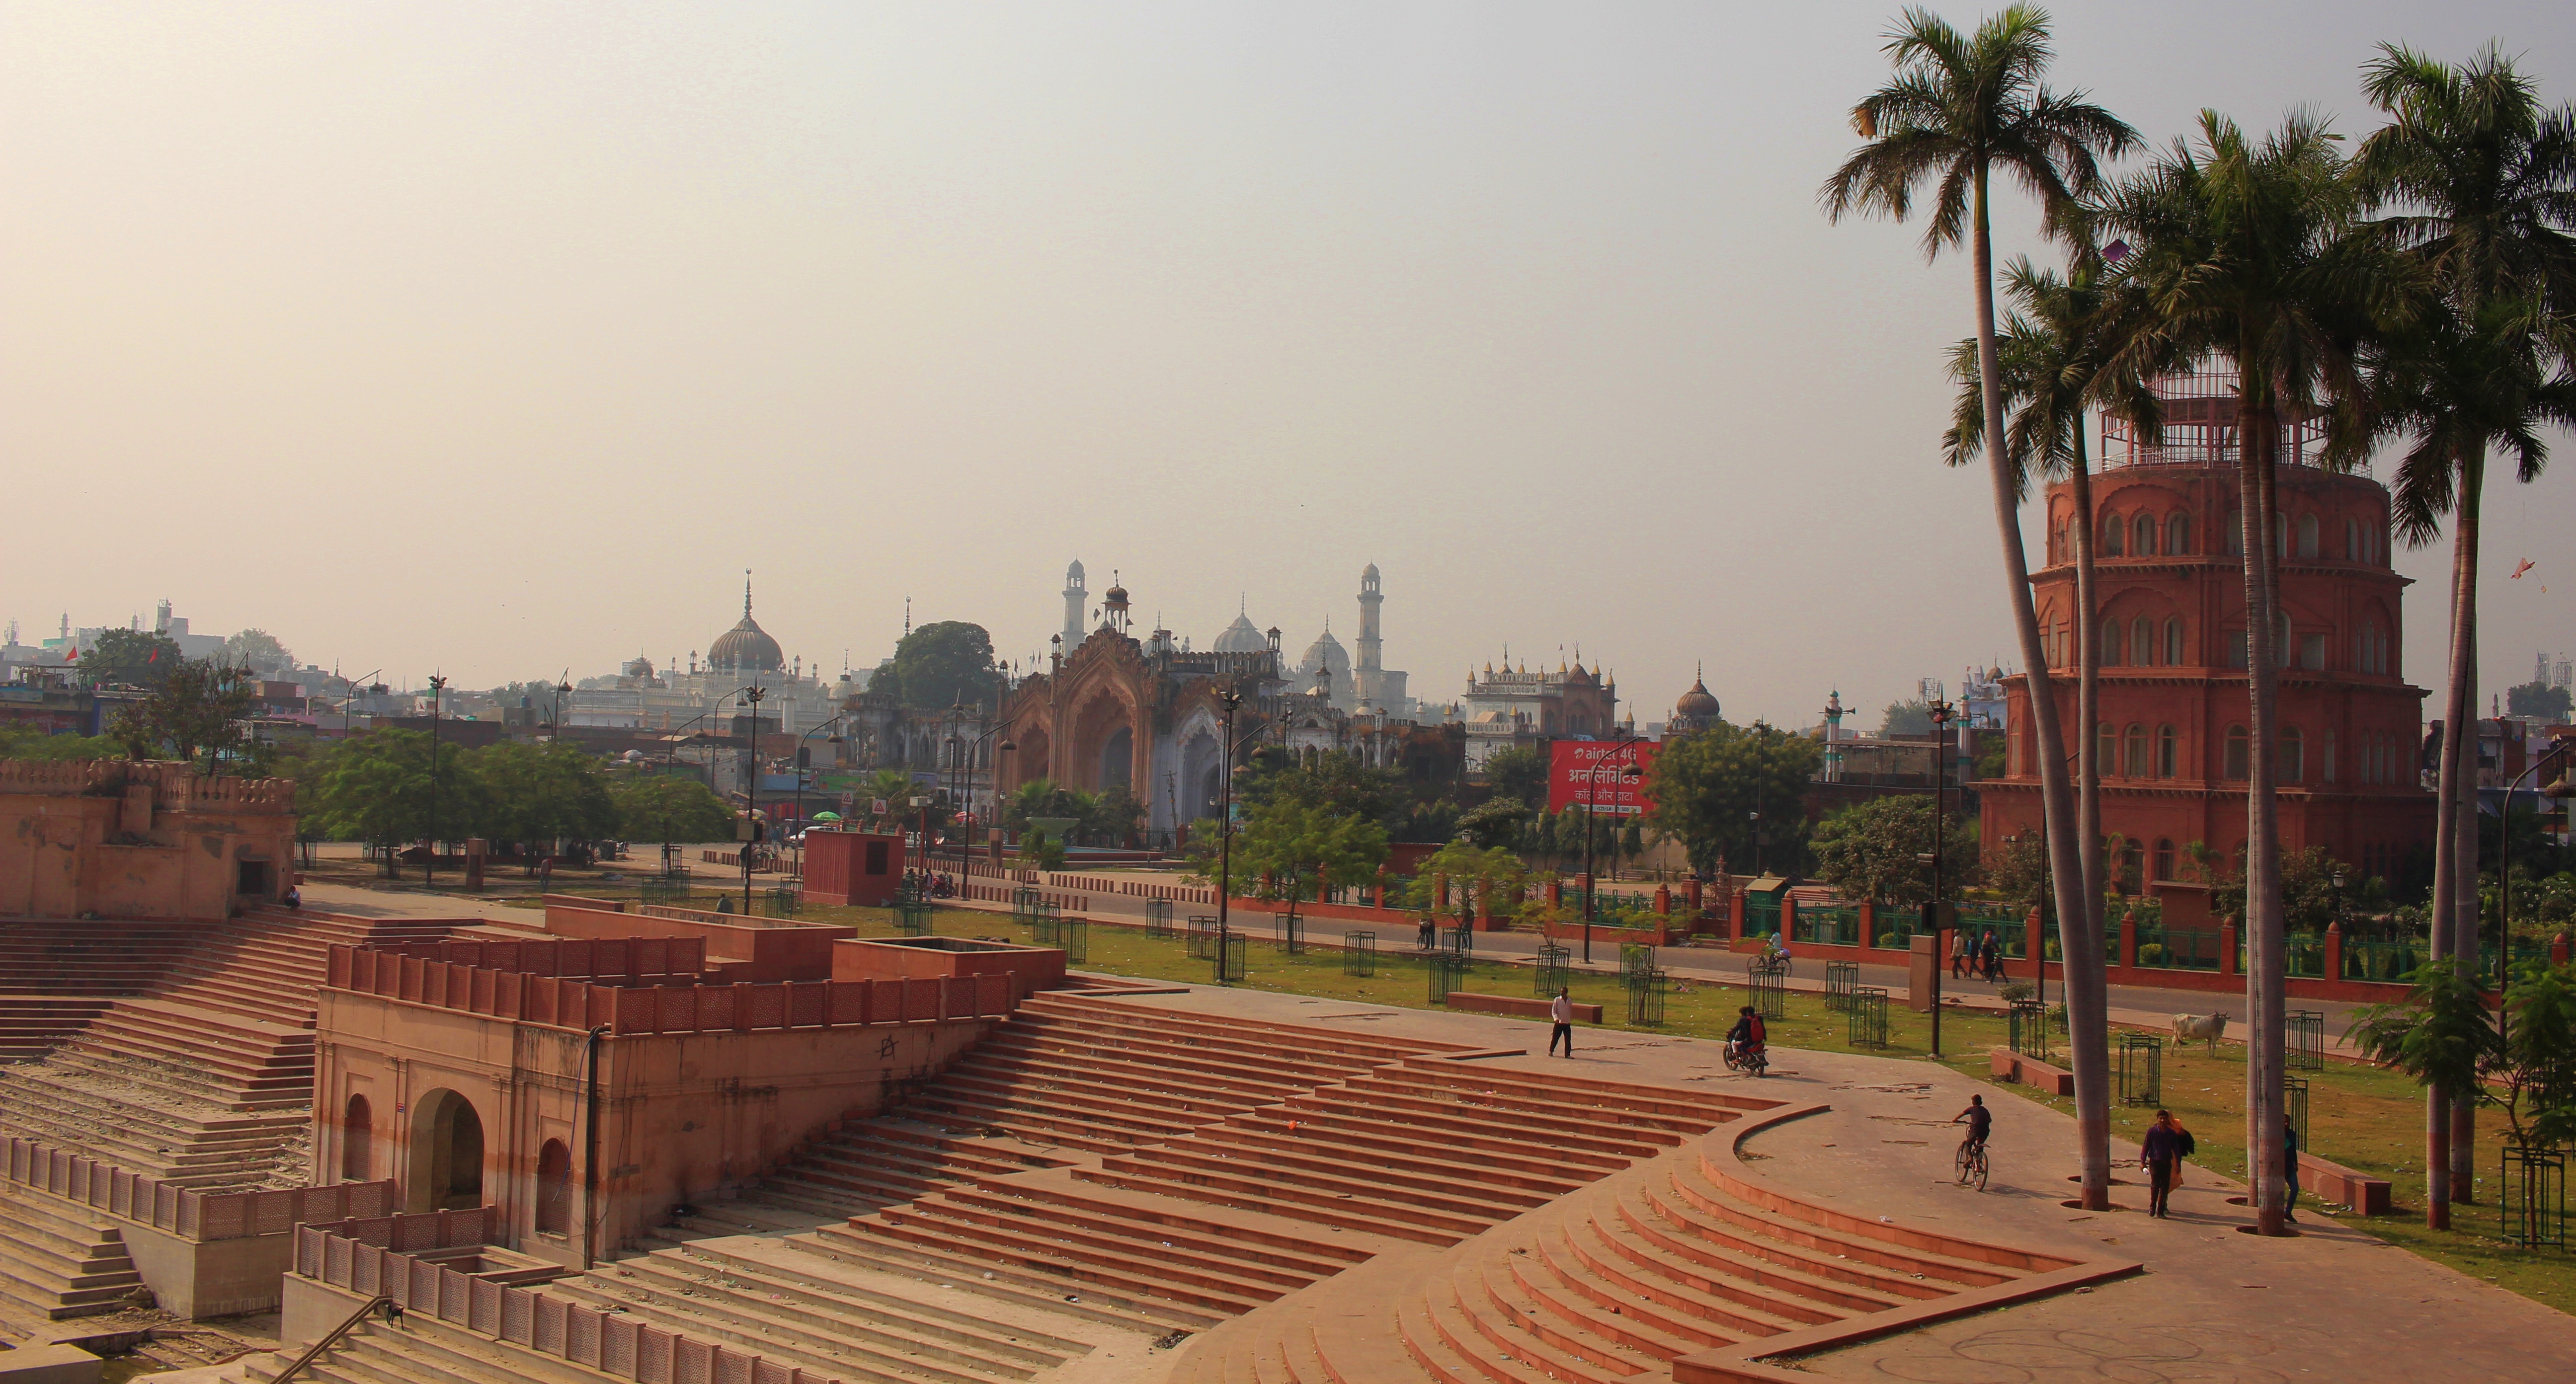 View, Husainabad Picture Gallery, lucknow, uttar pradesh, india